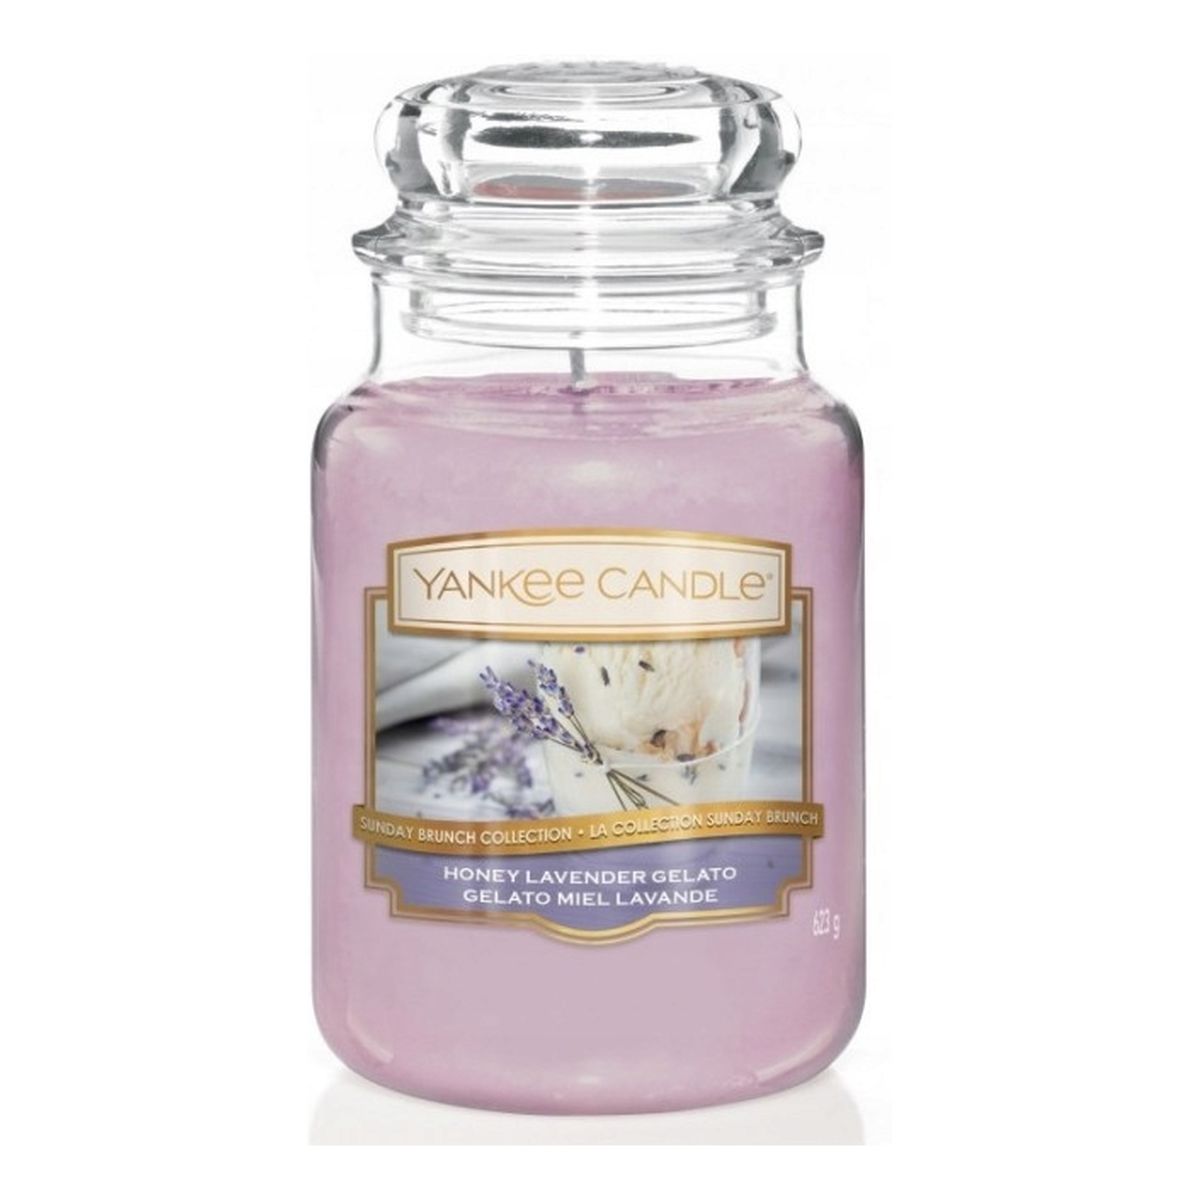 Yankee Candle Large Jar duża świeczka zapachowa Honey Lavender Gelato 623g